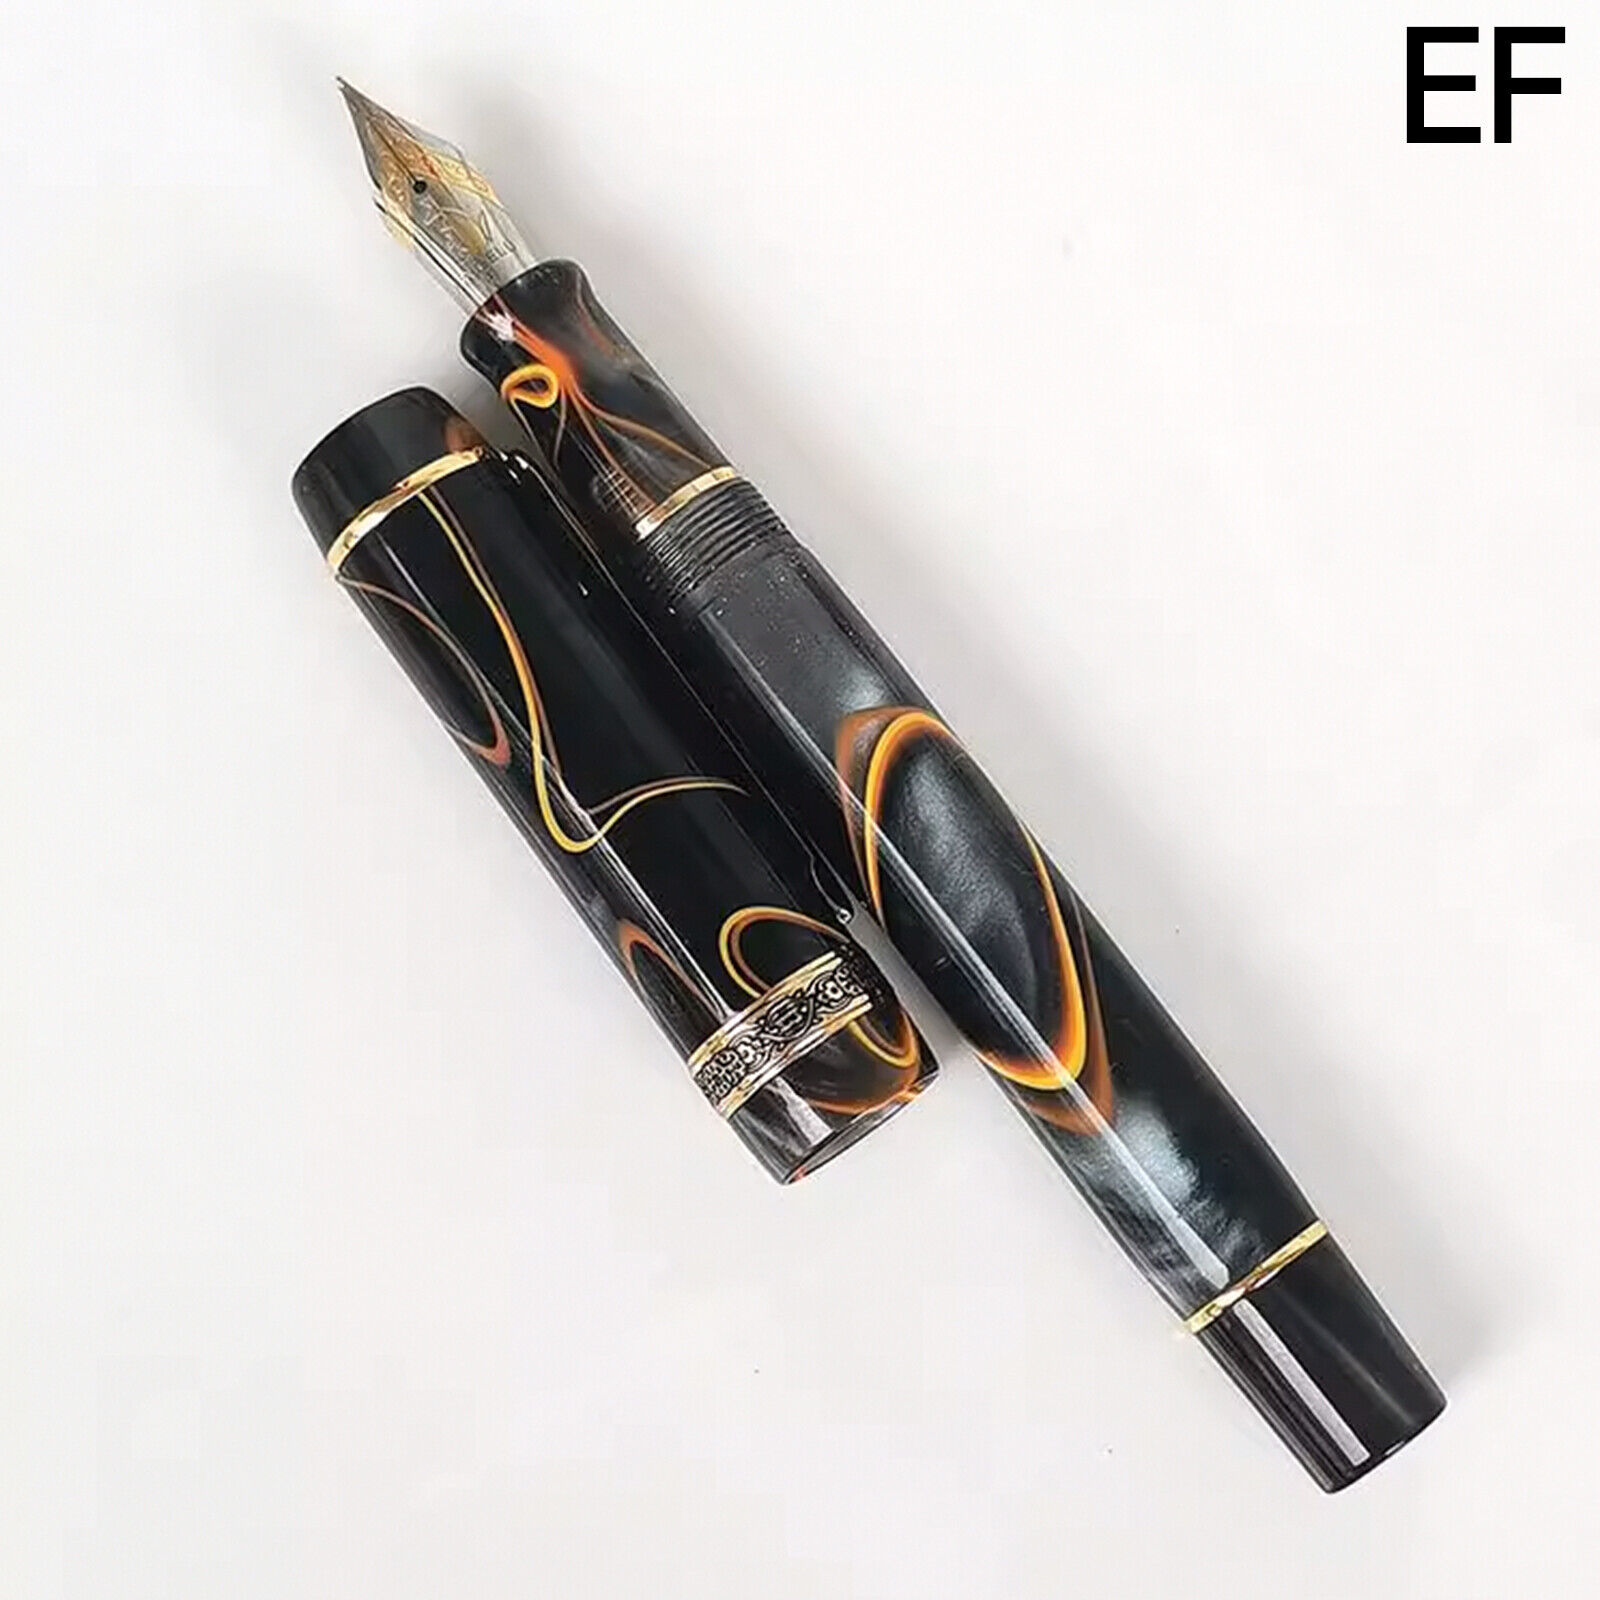 New Kaigelu 316 Resin Celluloid Black Fountain Pen EF/F Nib Writting Ink Pen